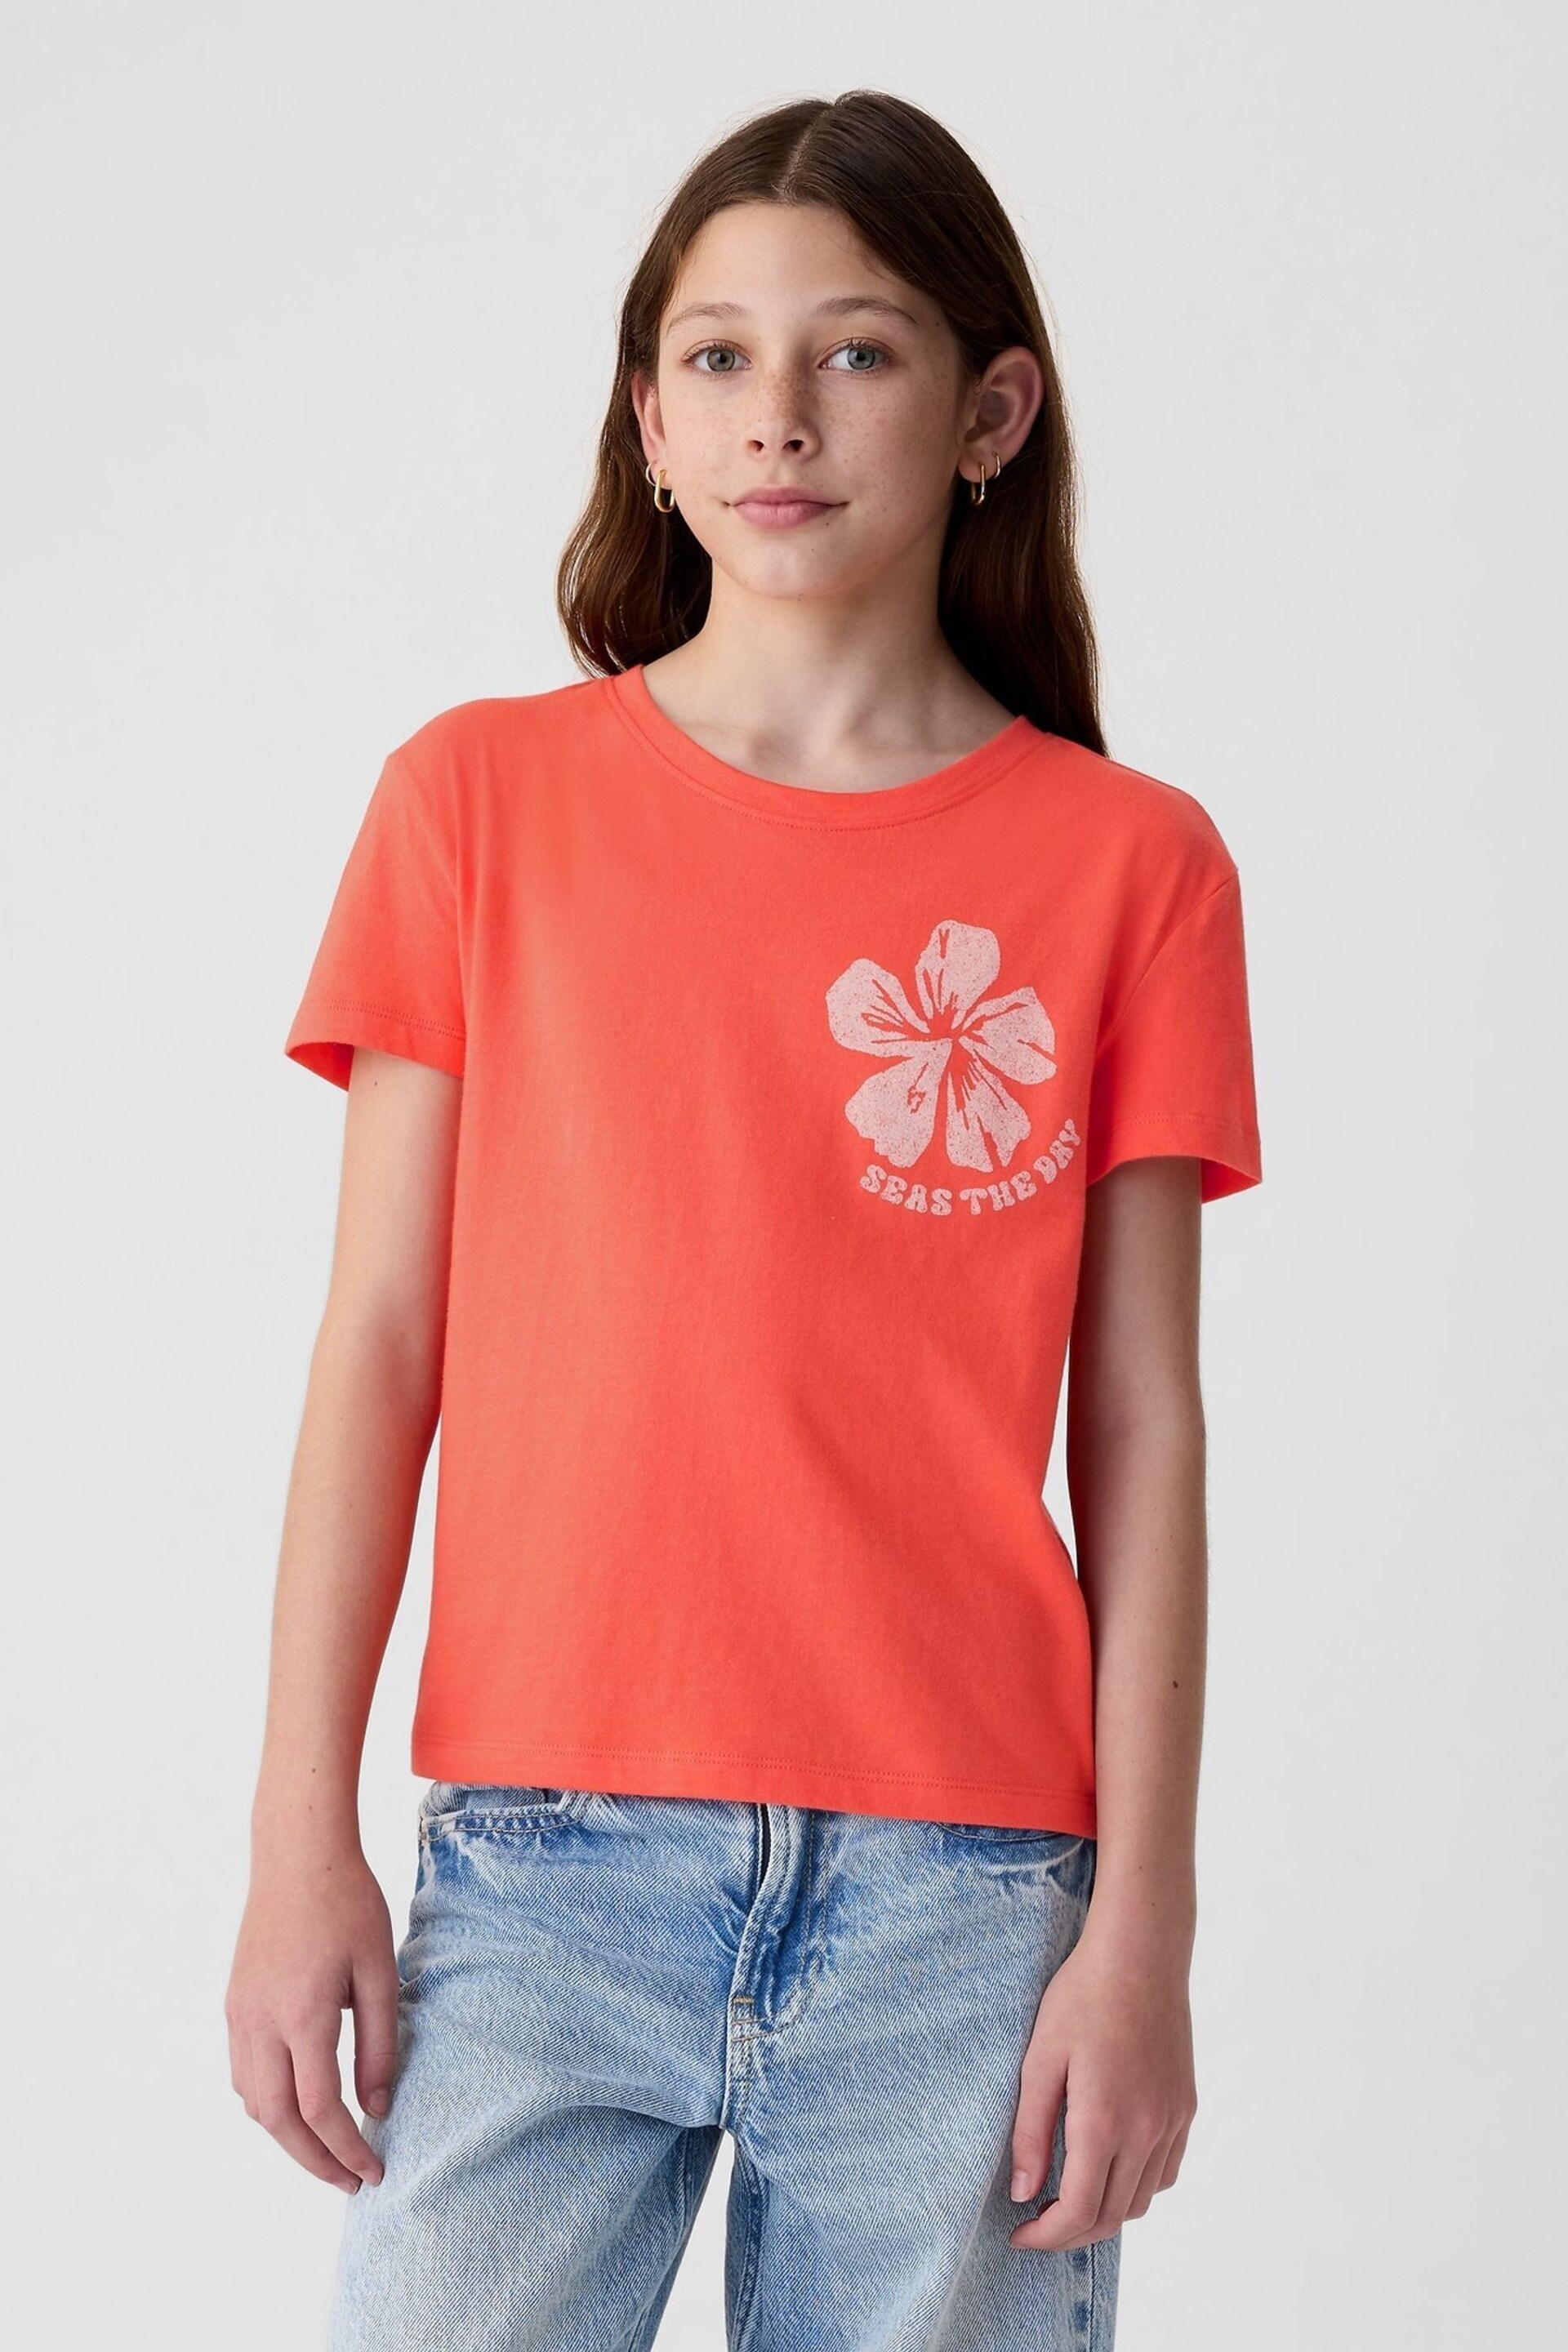 Gap Red Flower Slogan Graphic Crew Neck Short Sleeve T-Shirt (4-13yrs) - Image 1 of 3